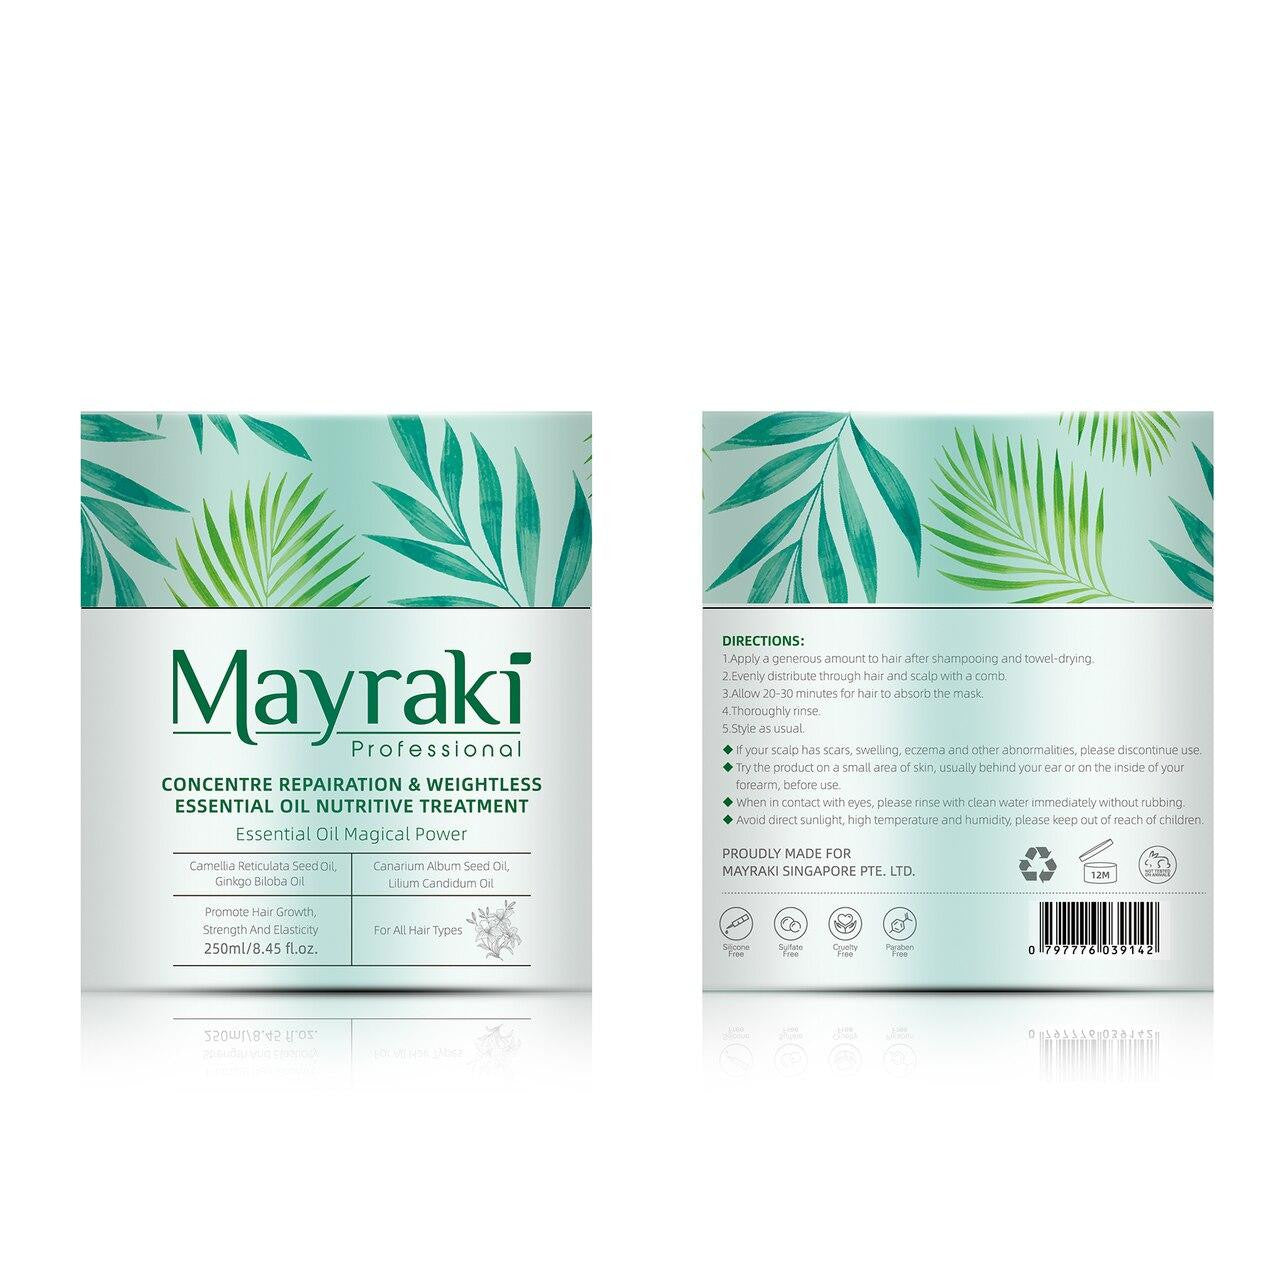 Mayraki Weightless Essential Oil Nutritive Treatment